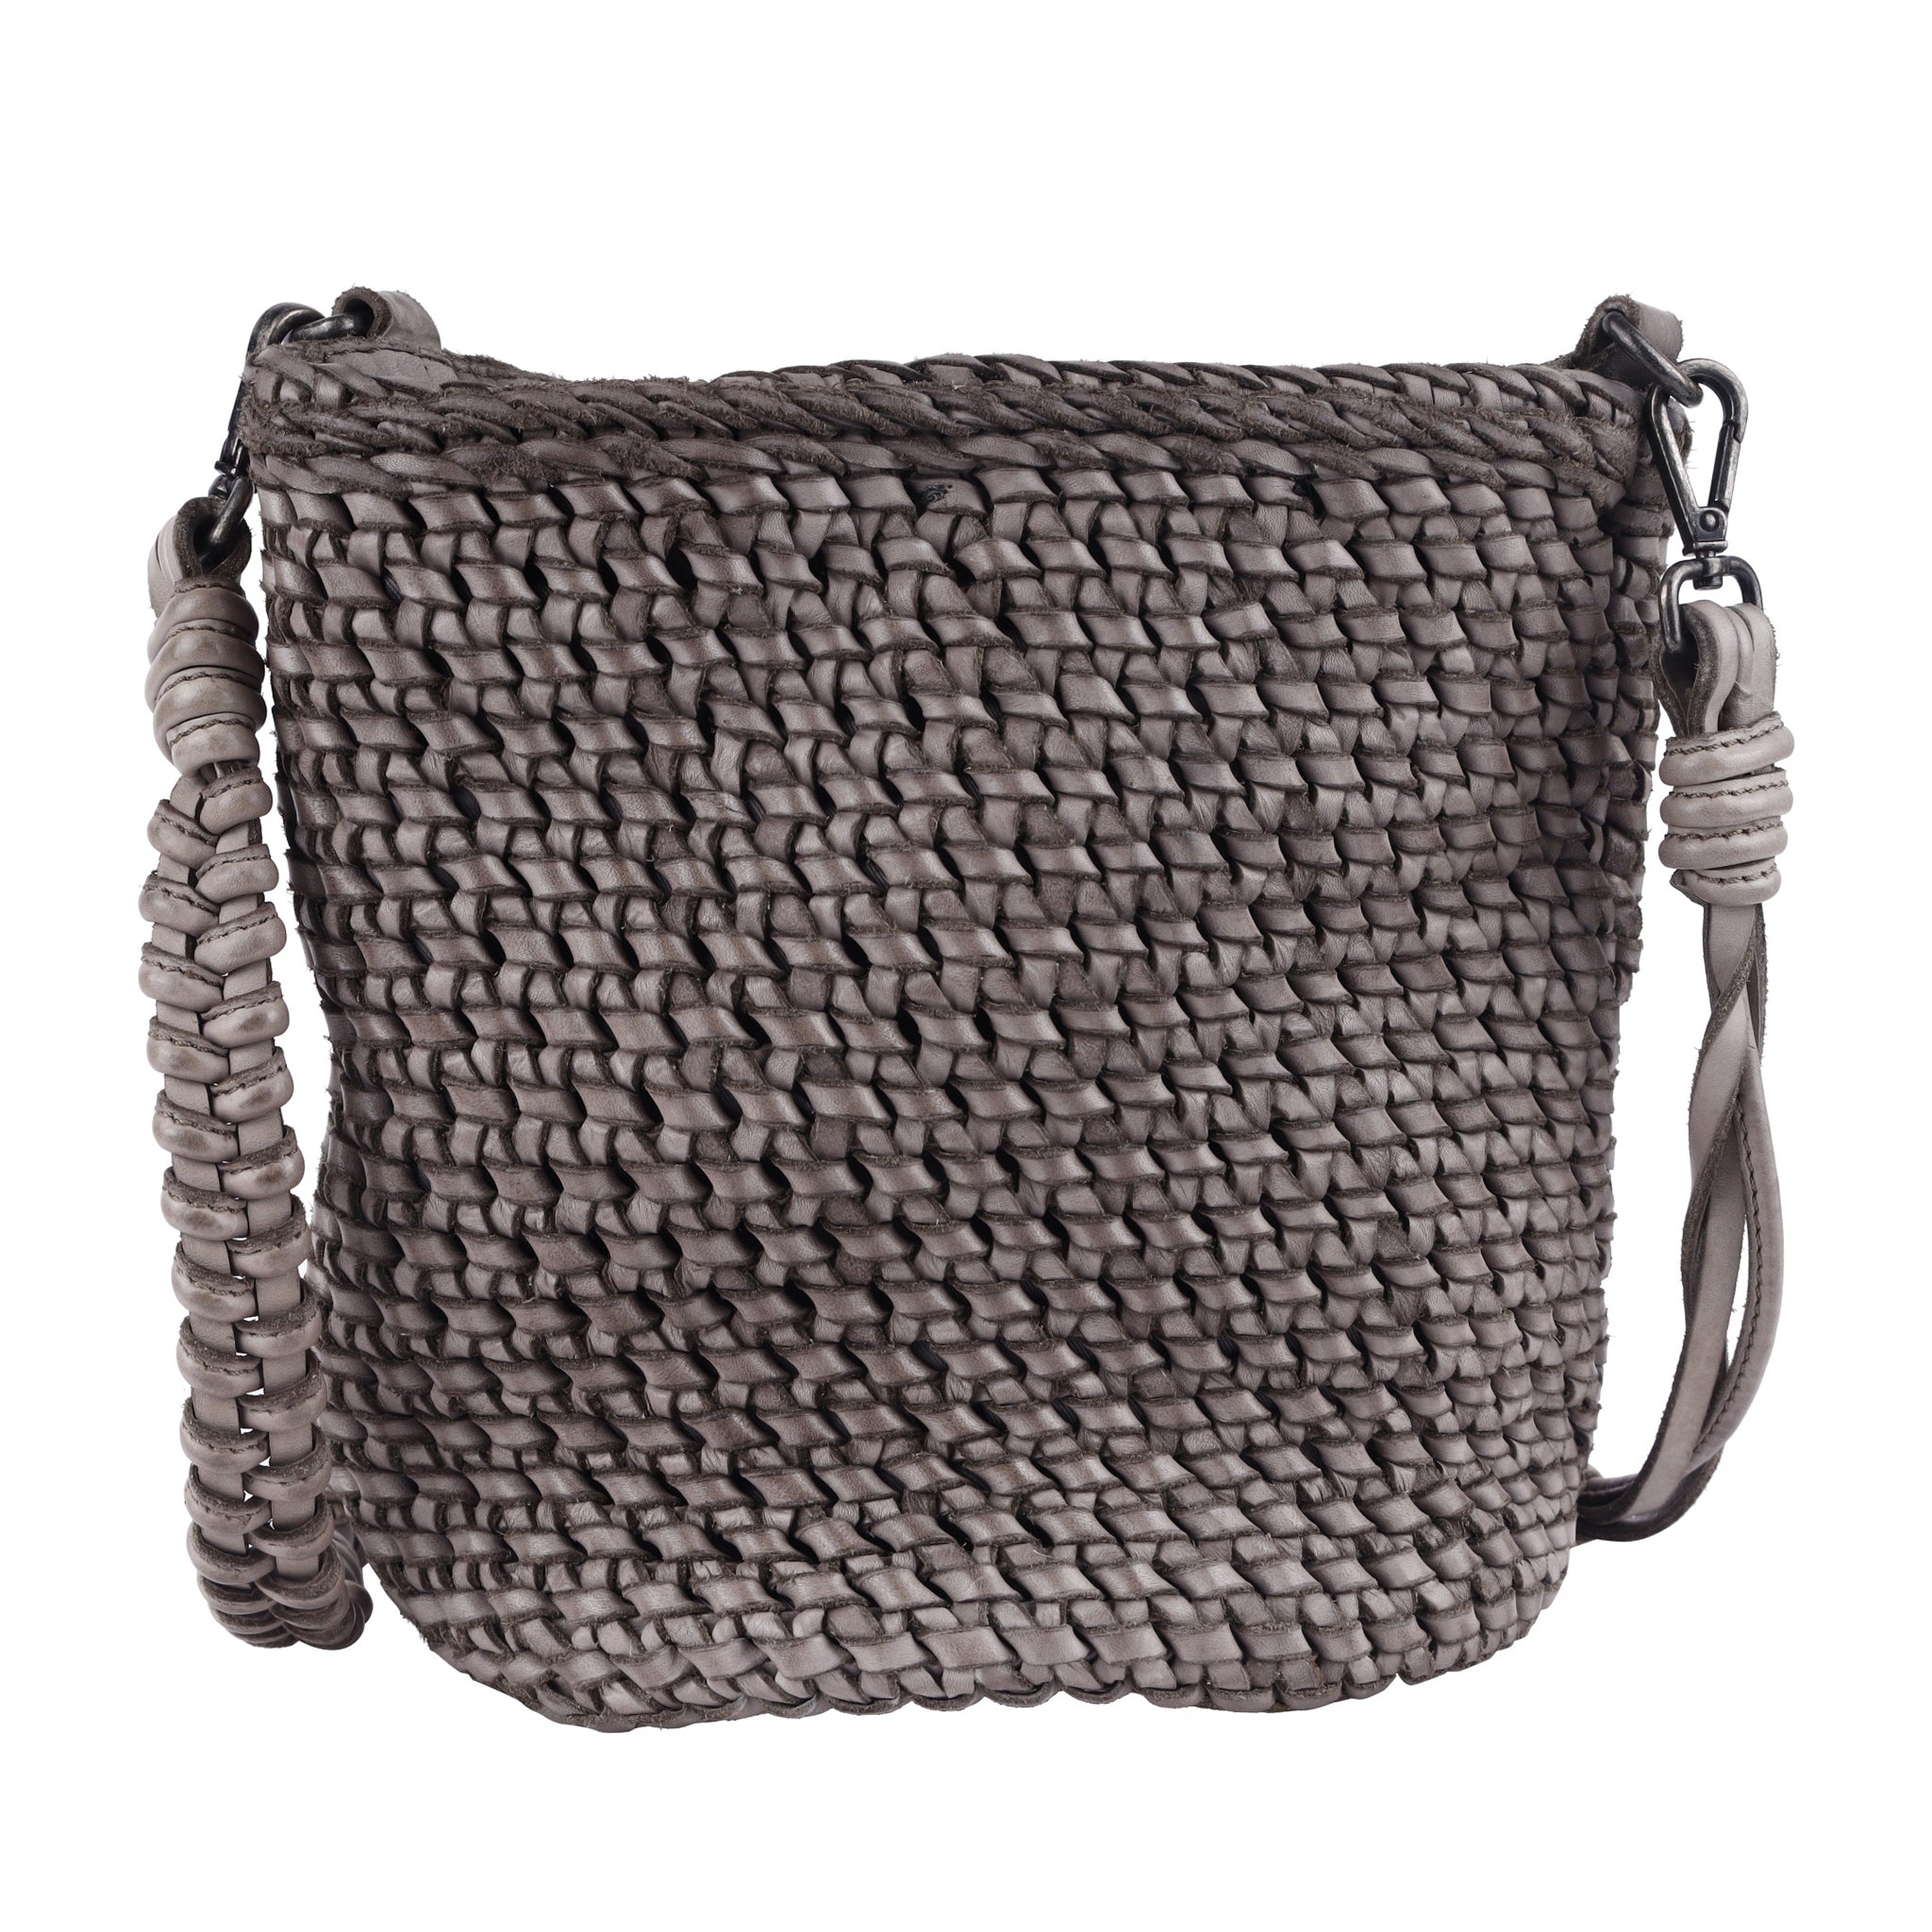 Retro Square Crossbody Bag Solid Color Small Purse Womens Stylish Casual  Shoulder Bag Handbag, 90 Days Buyer Protection